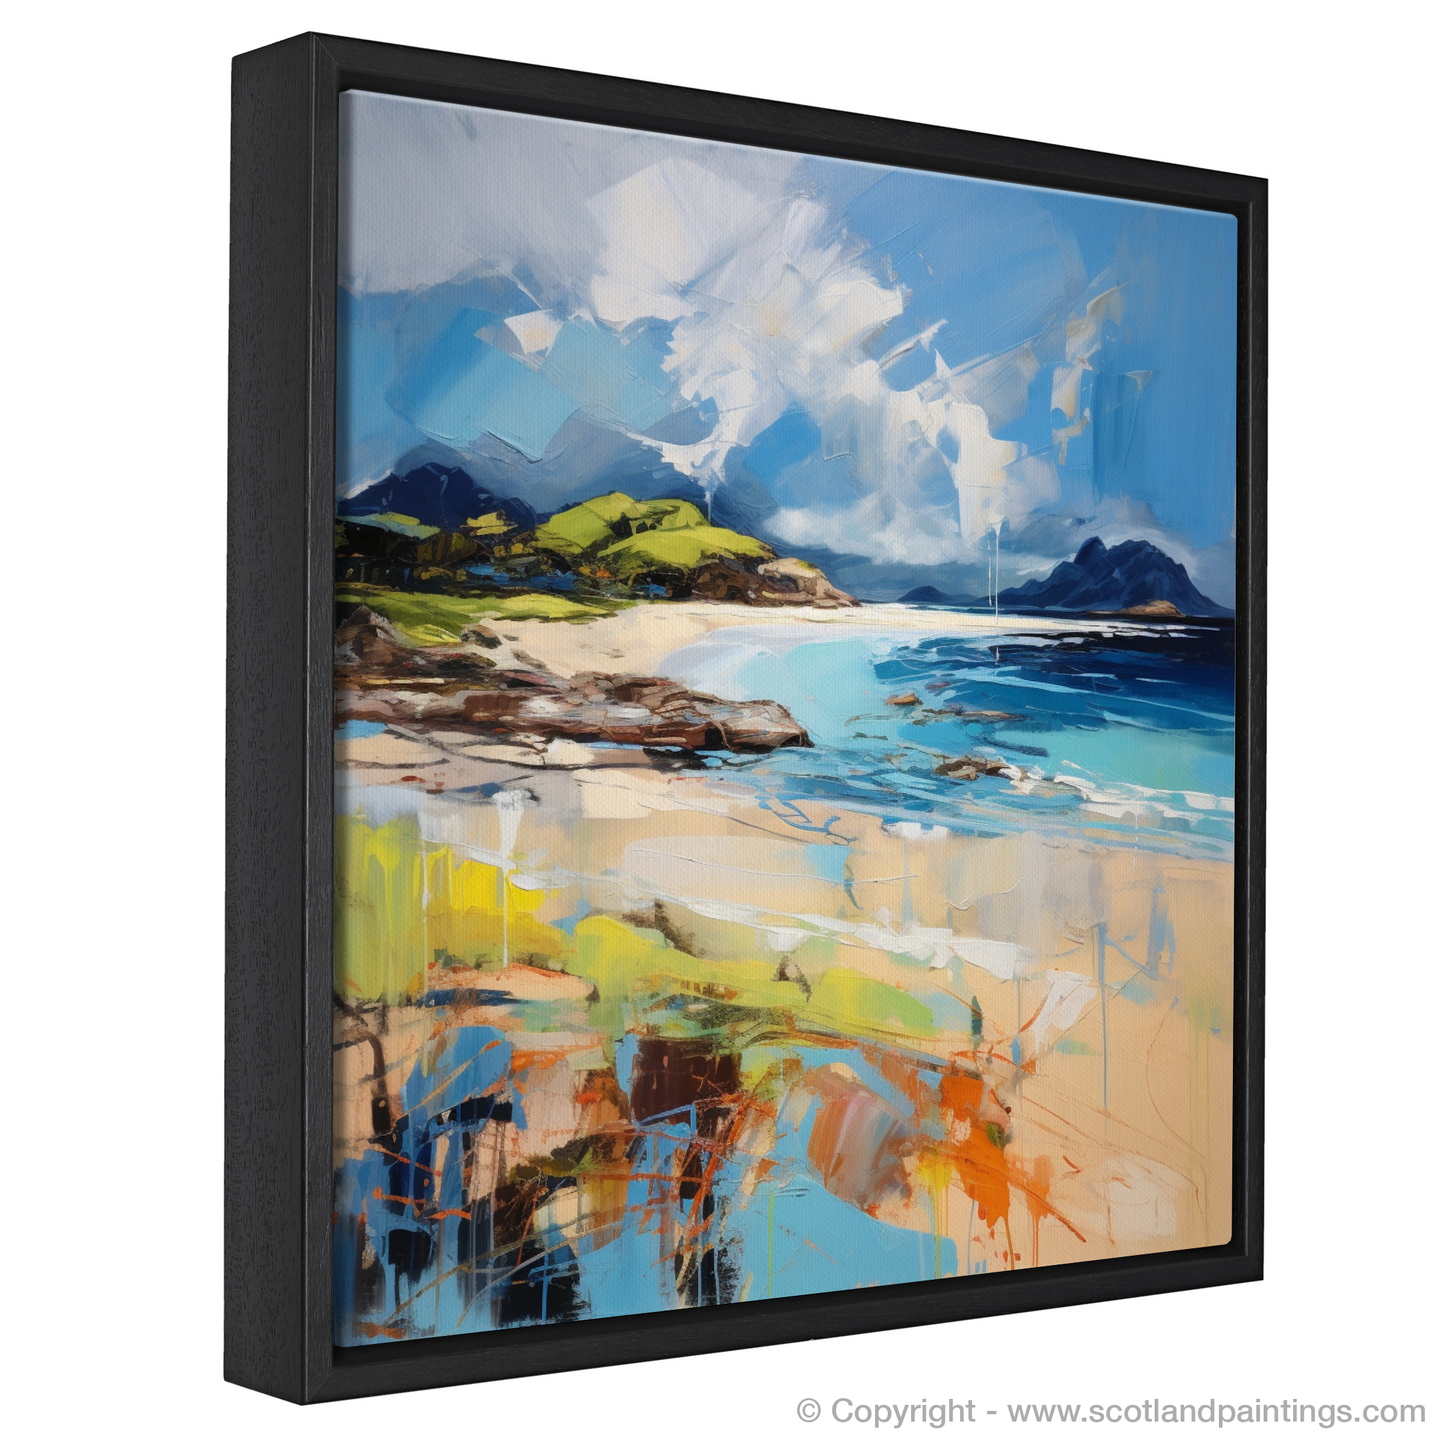 Painting and Art Print of Camusdarach Beach, Arisaig entitled "Expressionist Ode to Camusdarach Beach".